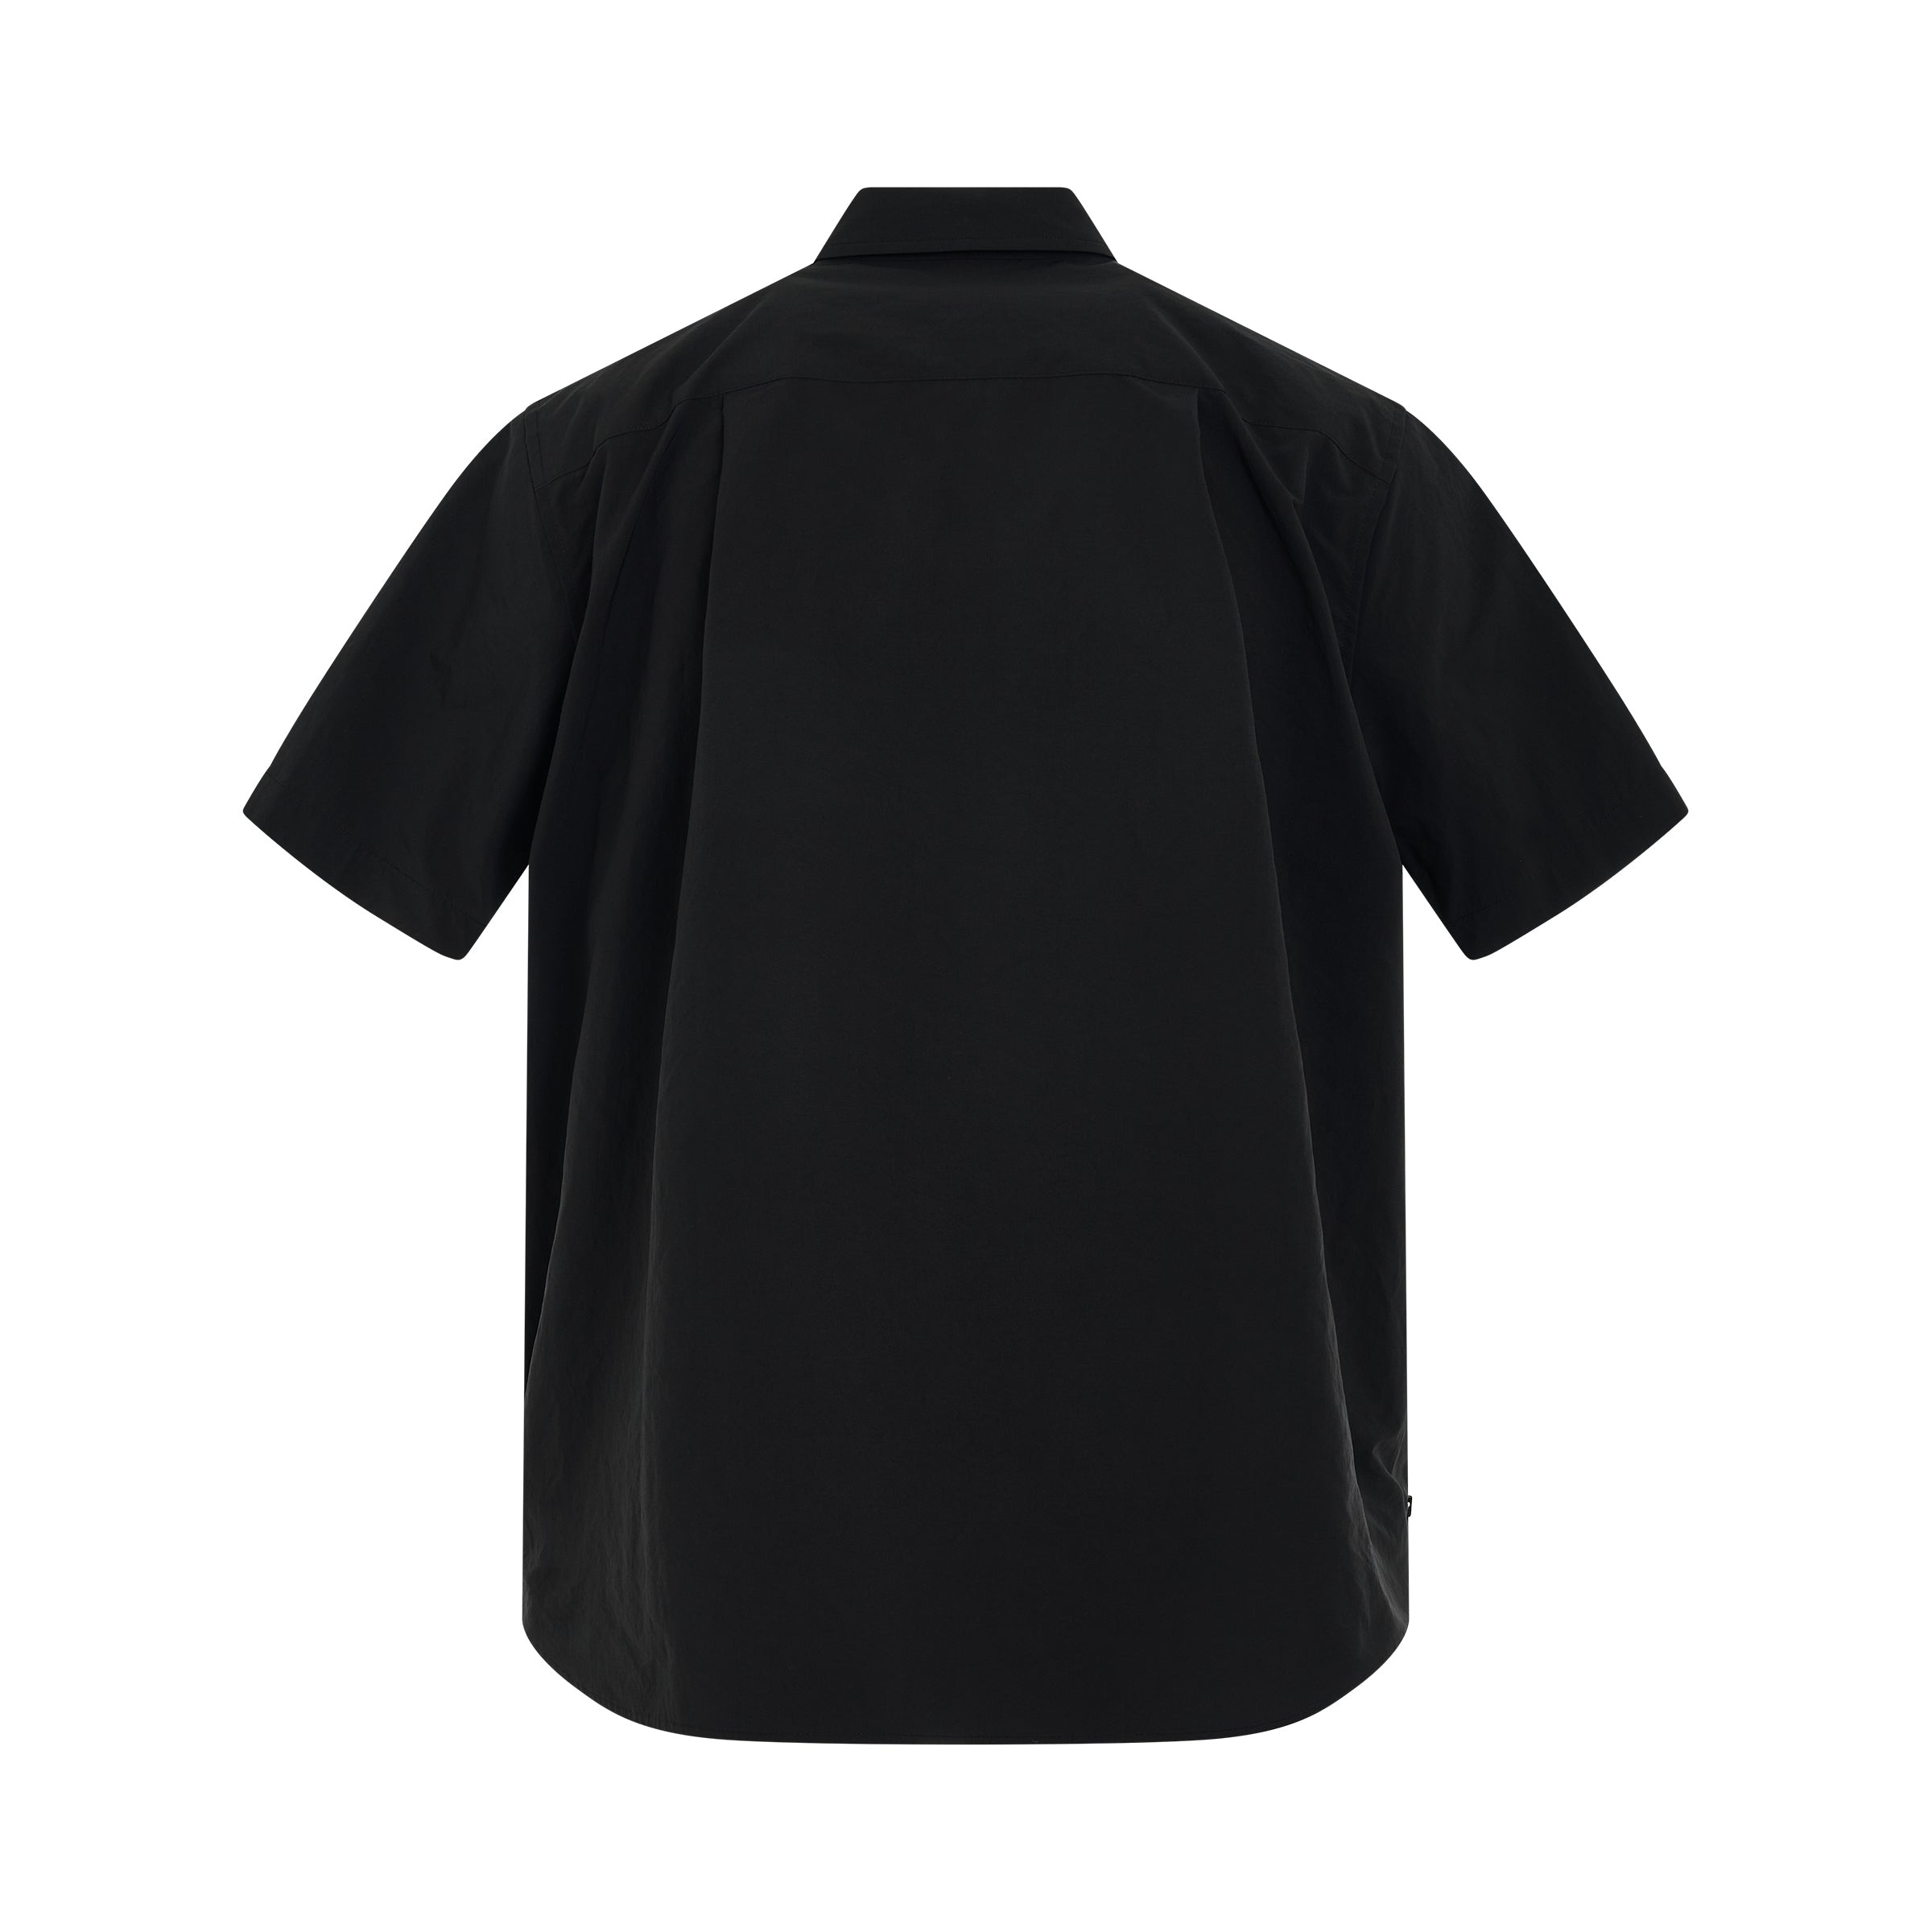 Matte Taffeta Shirt in Black - 4